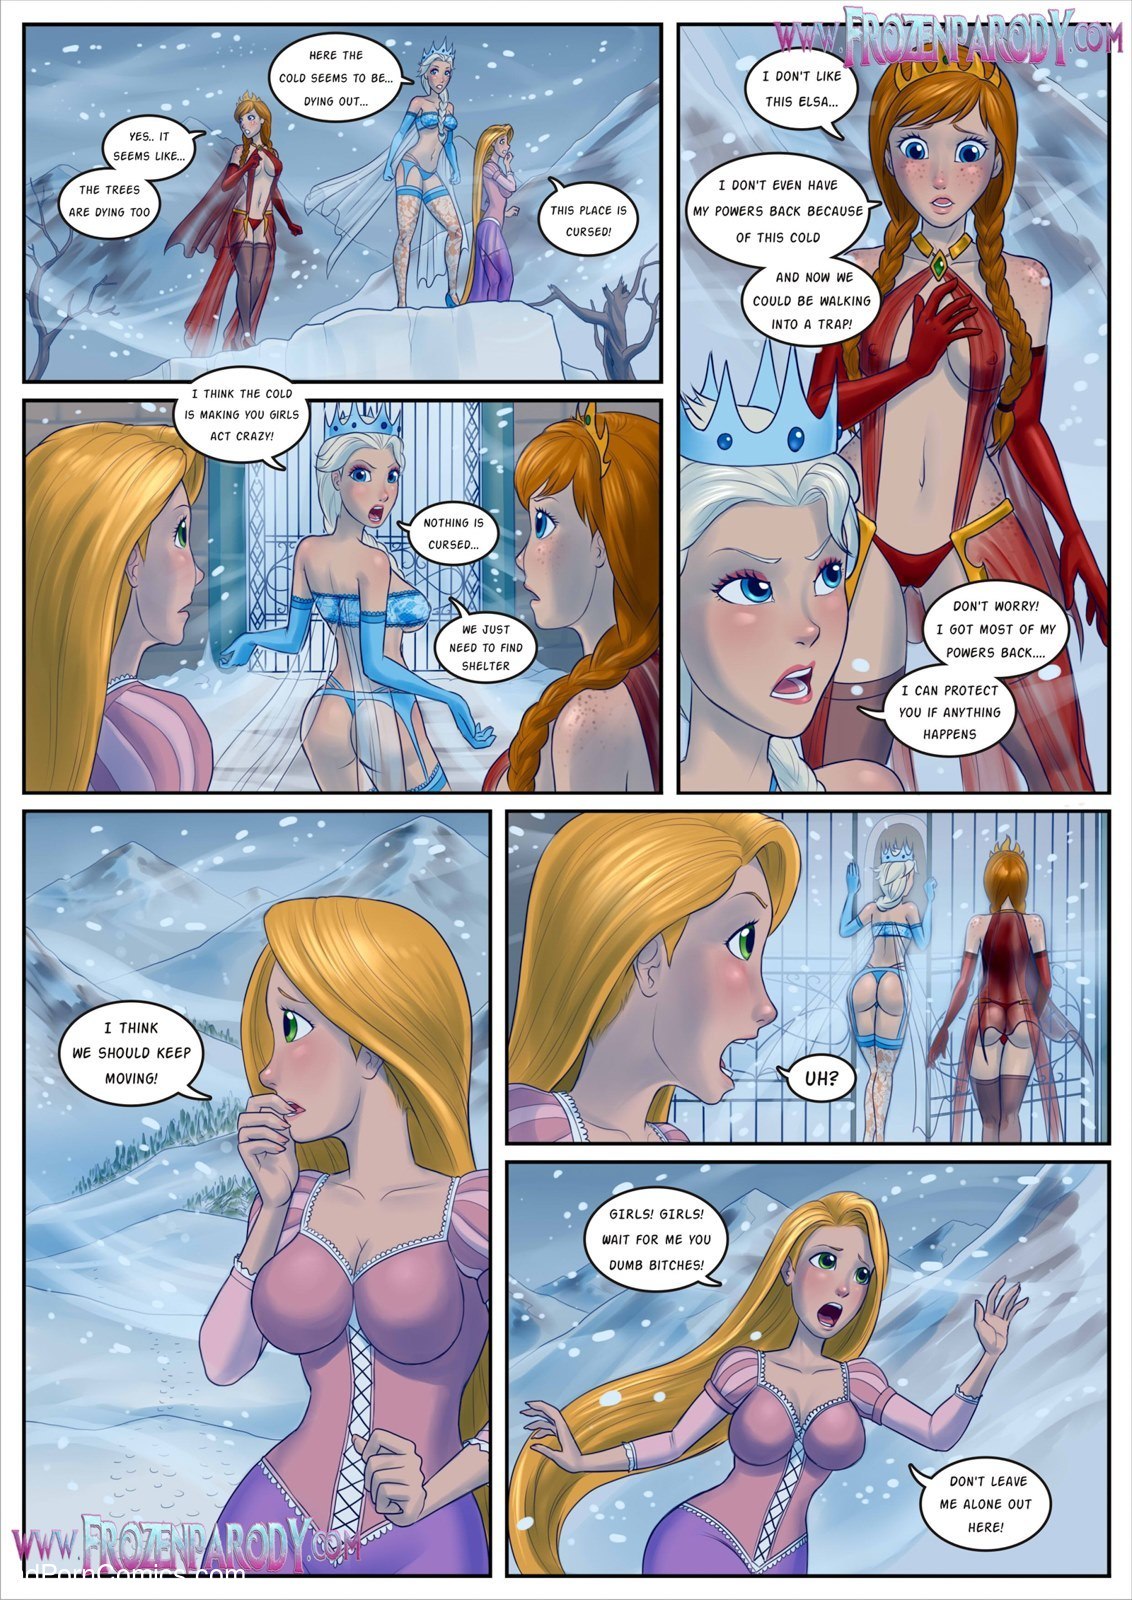 Frozen Parody 13- Beauty And Beast free Cartoon Porn Comic â€“ HD Porn Comics